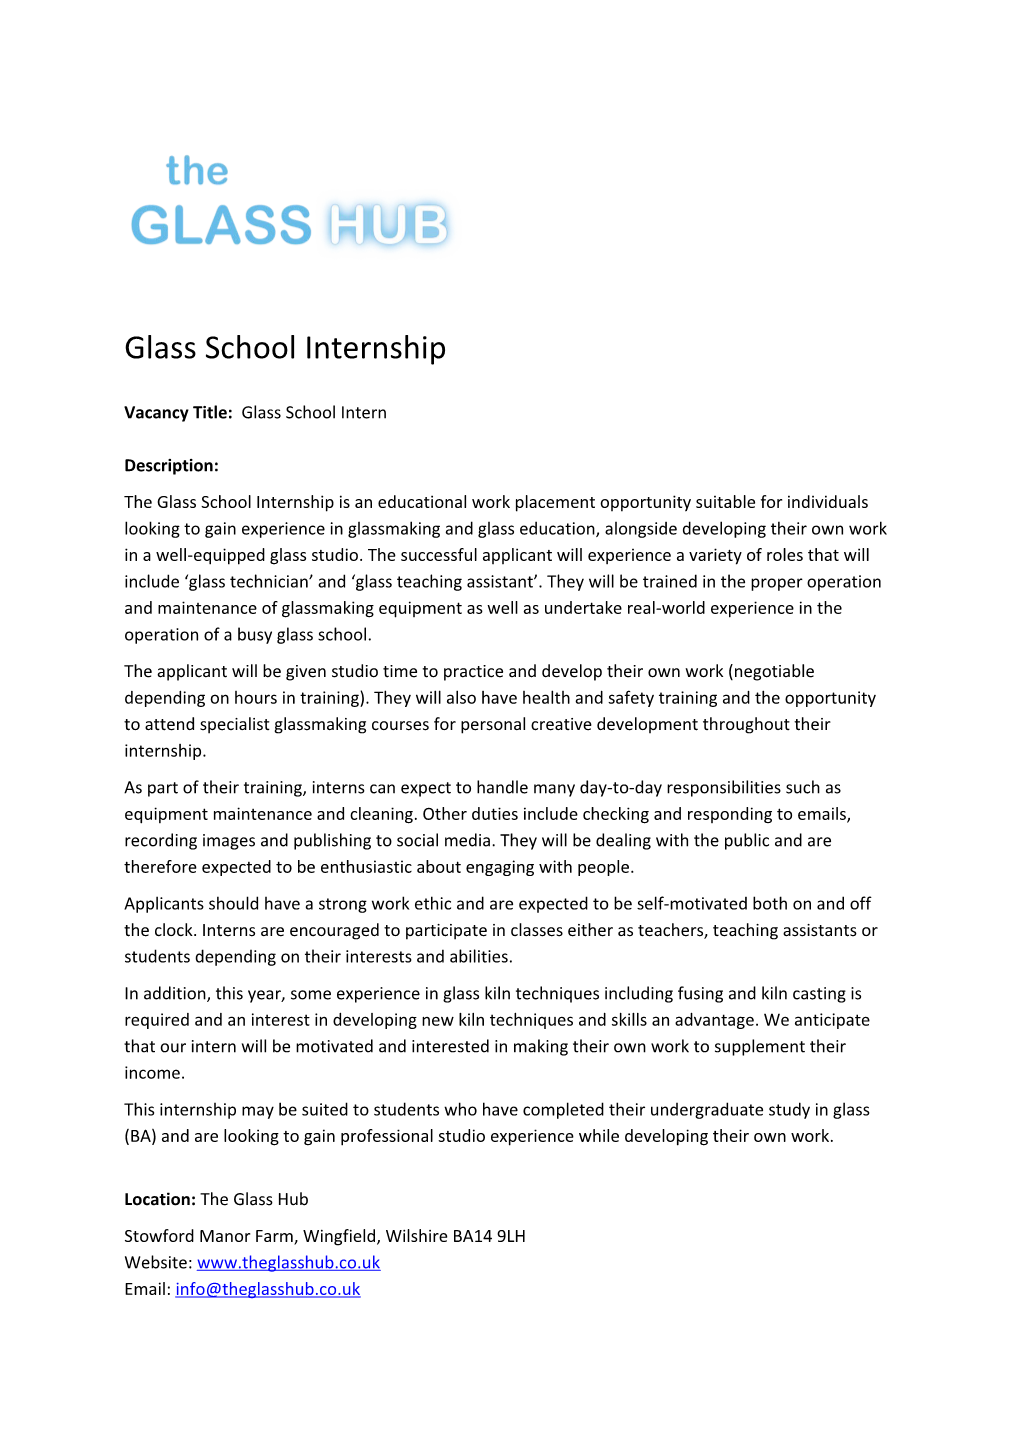 Vacancy Title: Glass School Intern